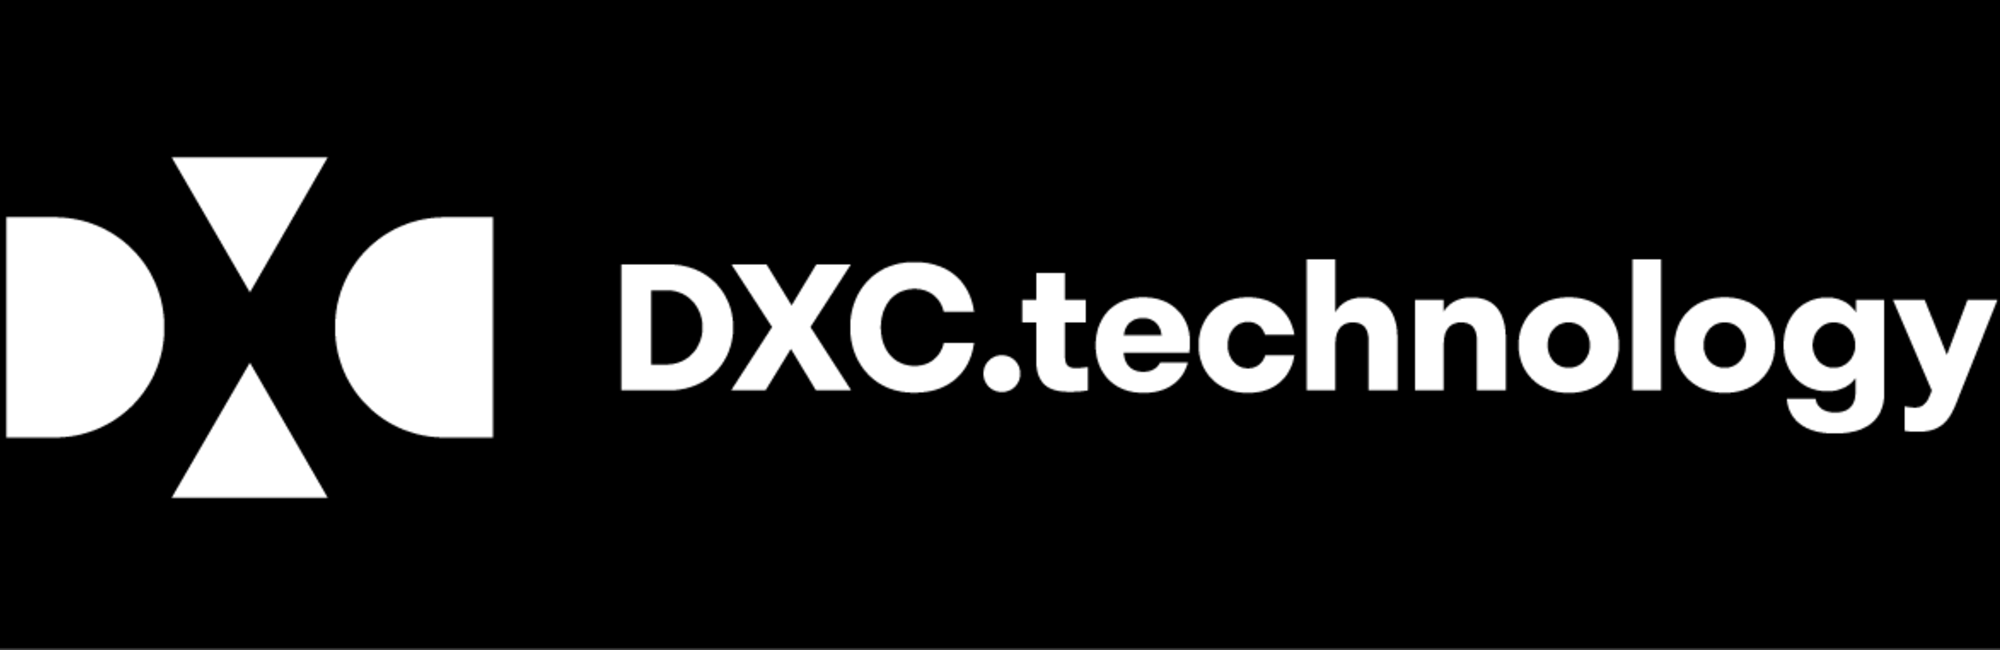 dxcireland_dxc_rowanmcgrath_tech_techireland